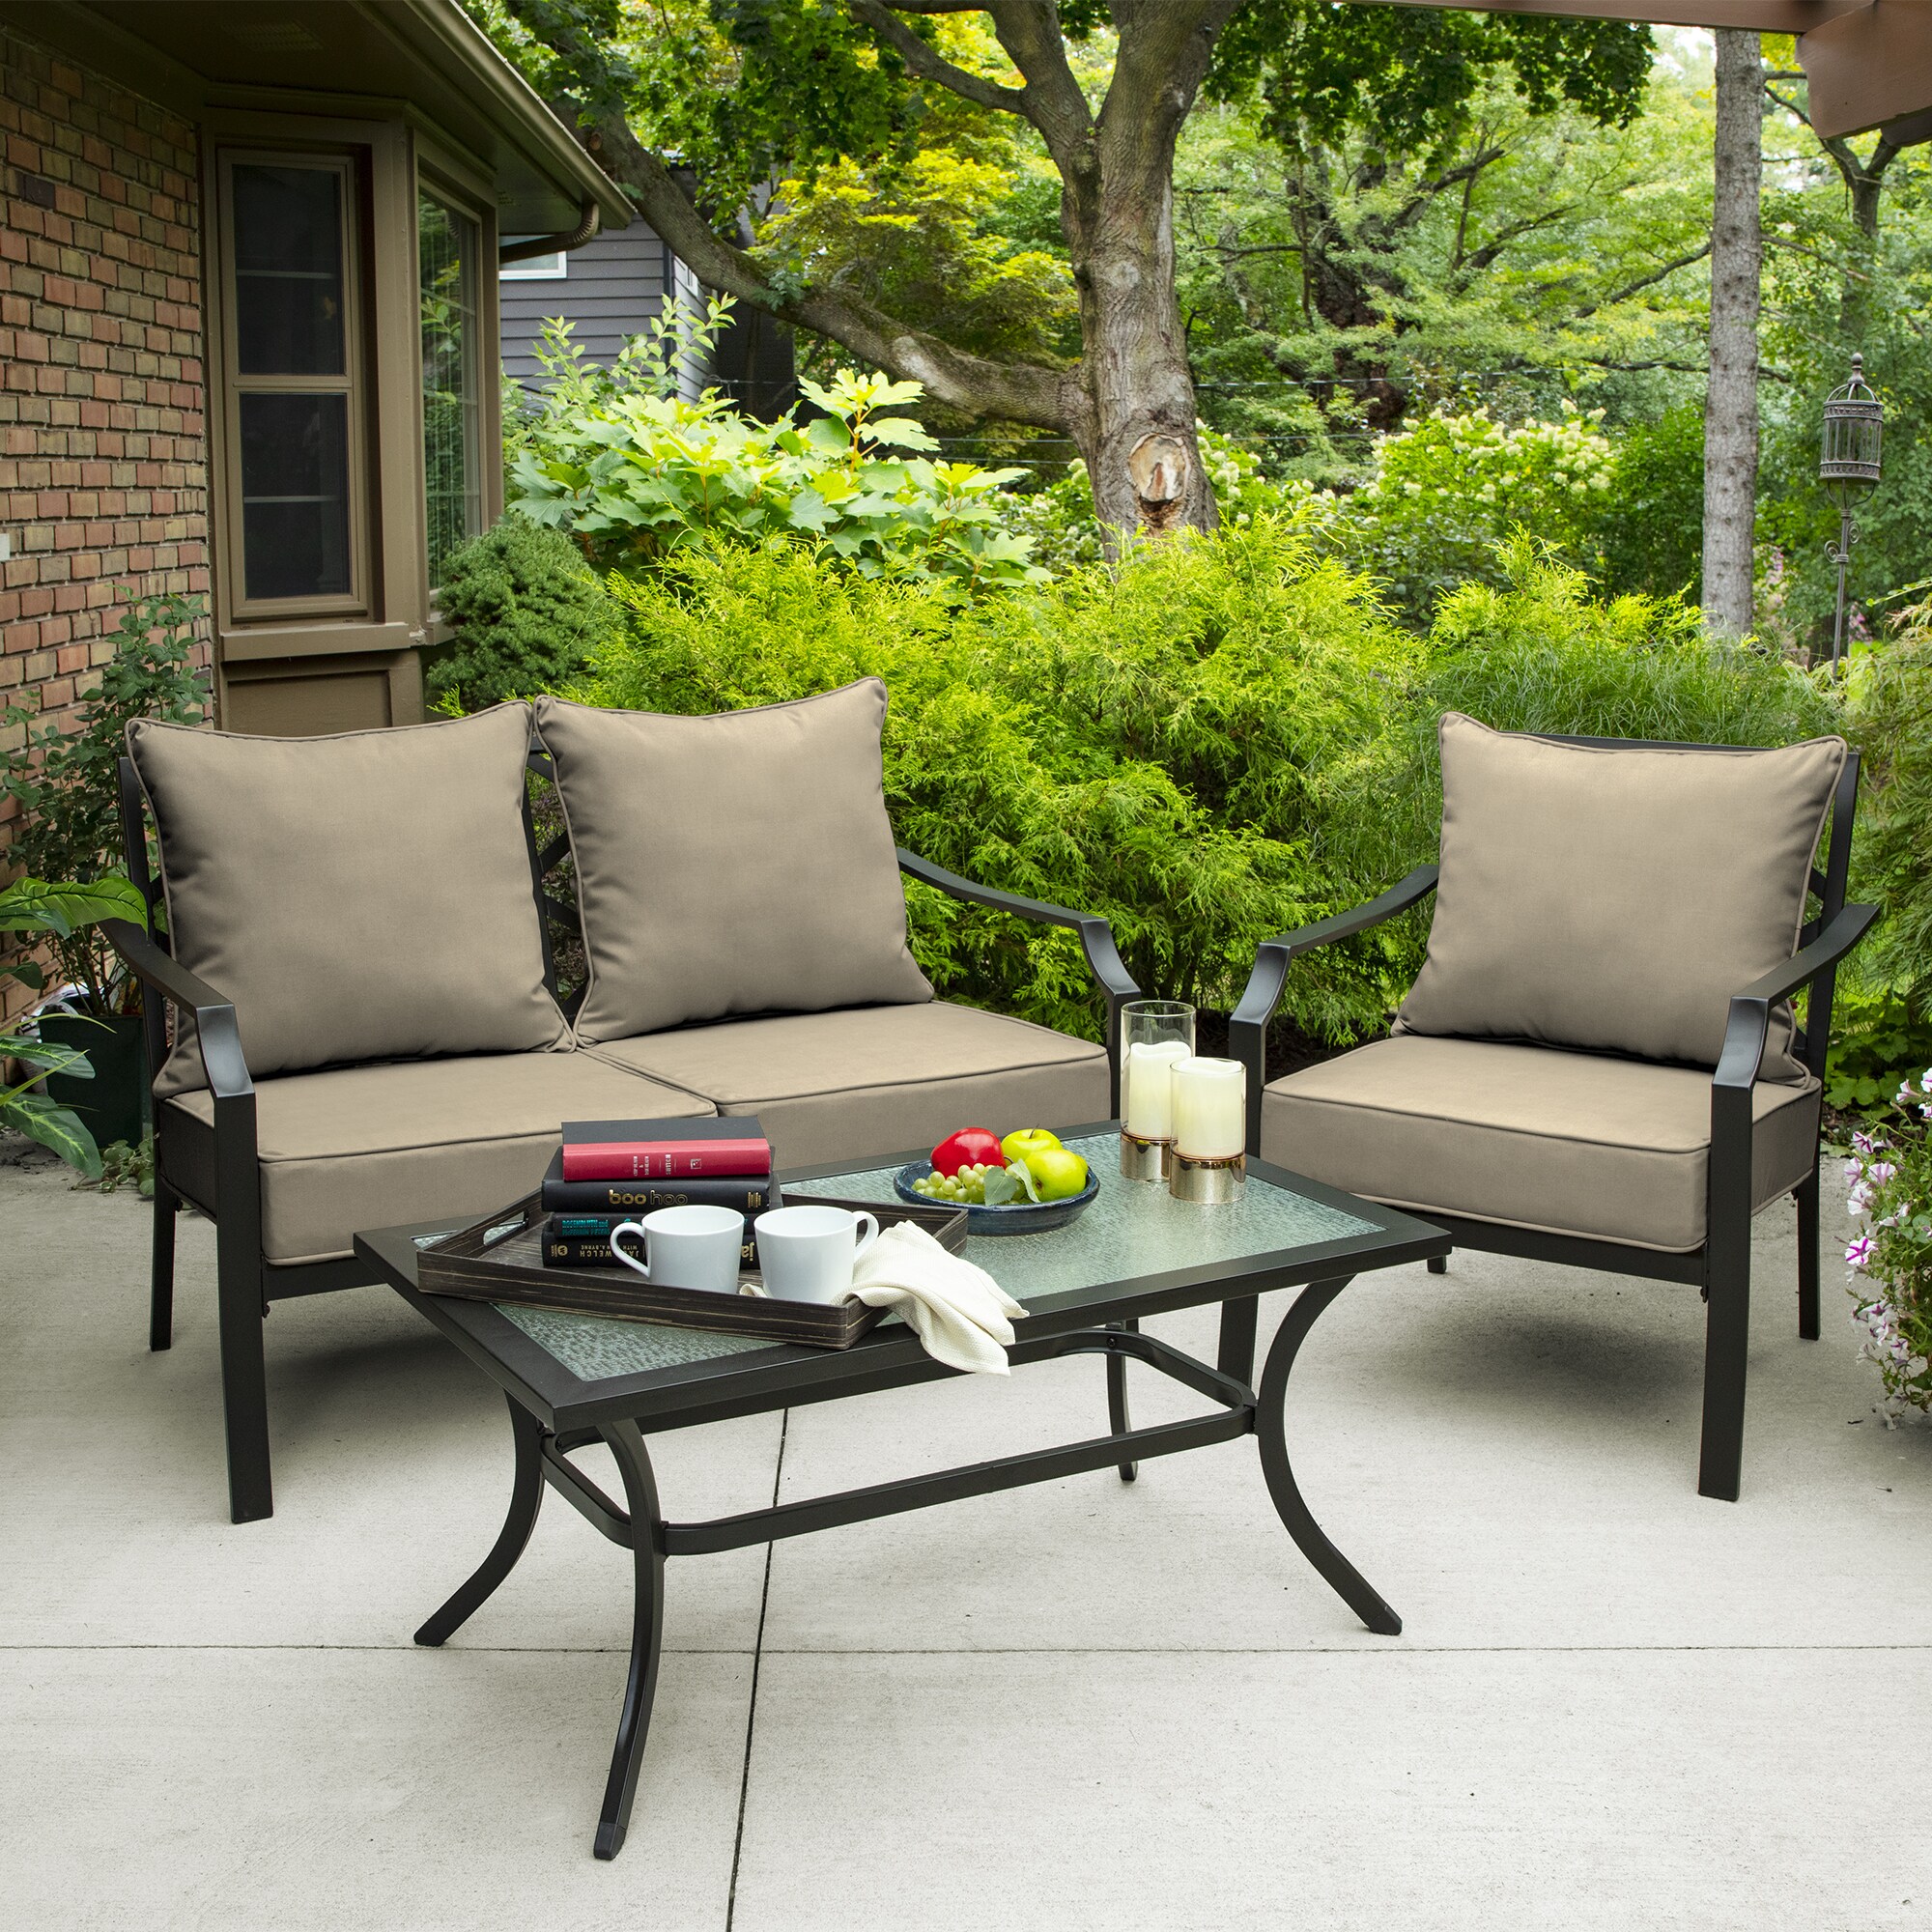 Patio Chair Sofa Cushion Set Seat Dog Pads Garden Outdoor Furniture Home 